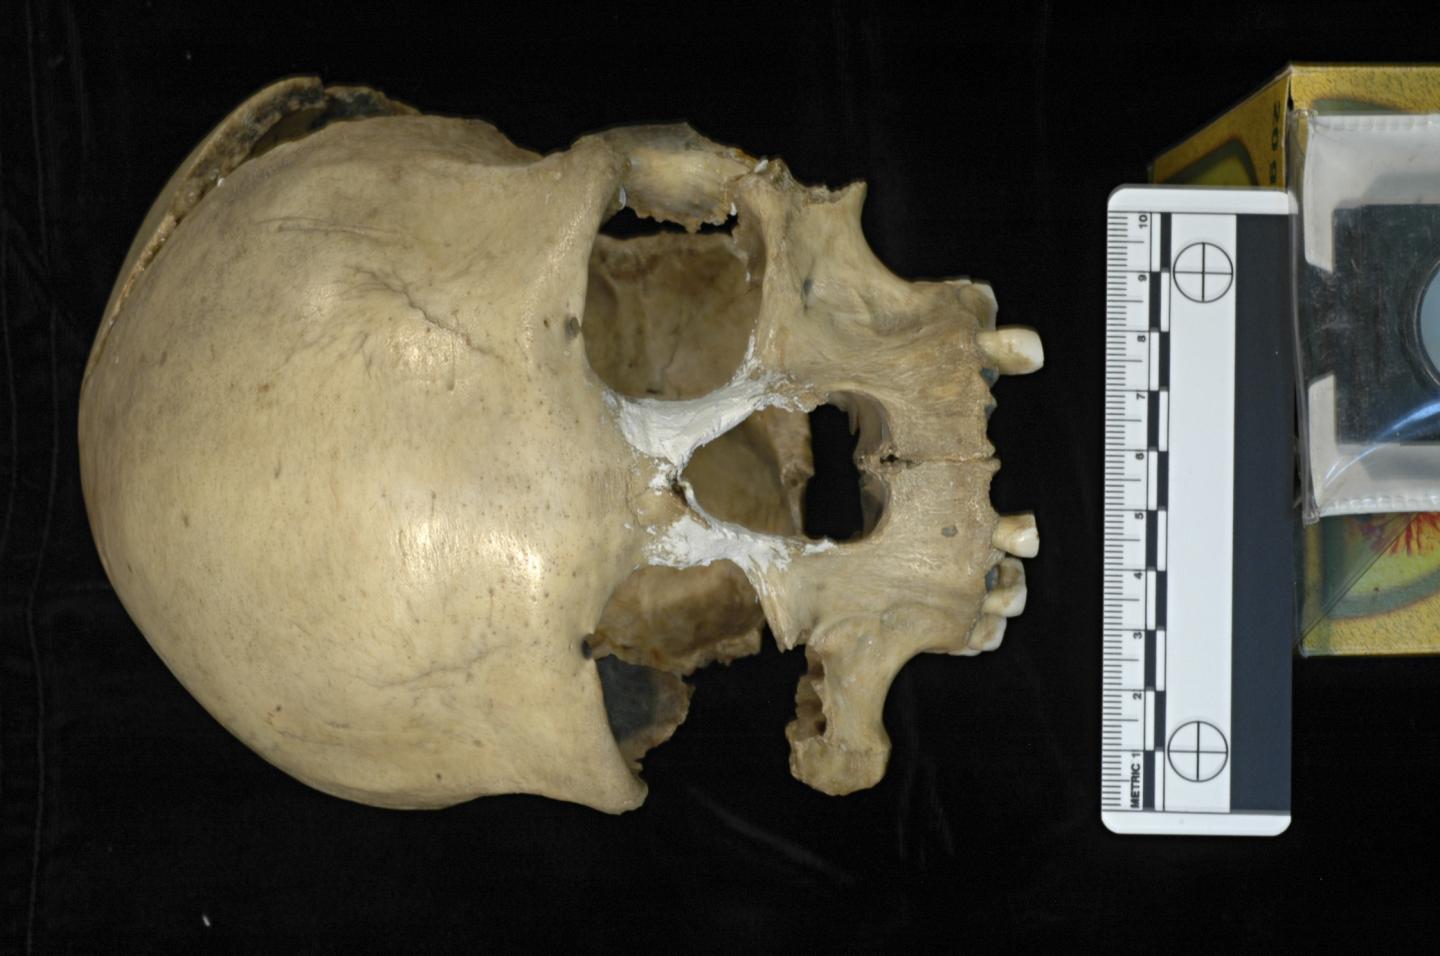 Pestera Muierii Woman's Skull